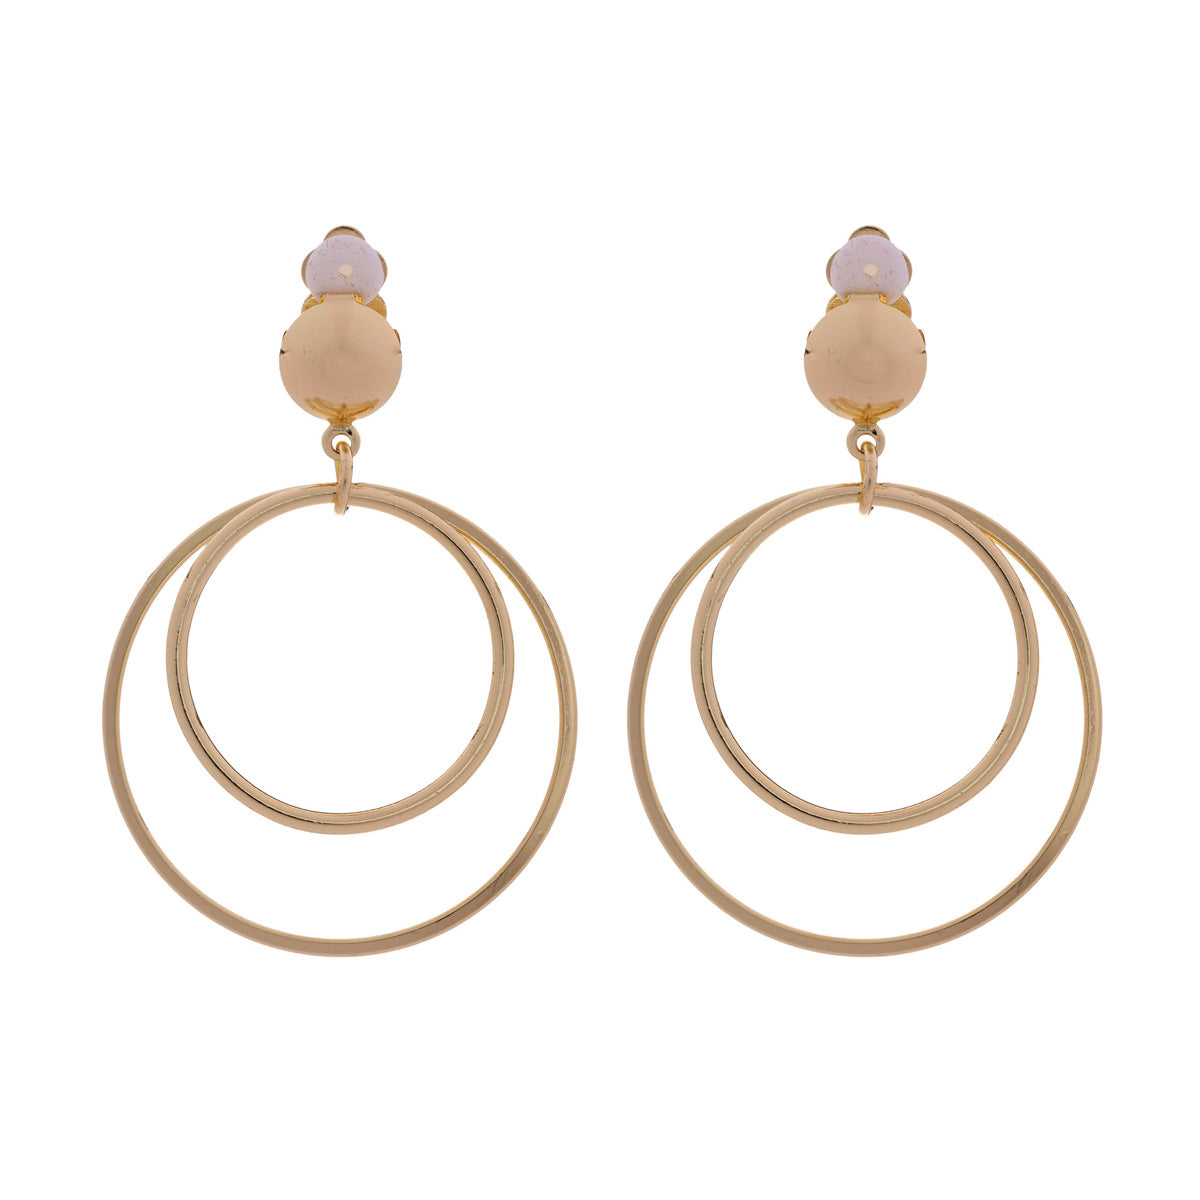 Hanging ring clip earrings